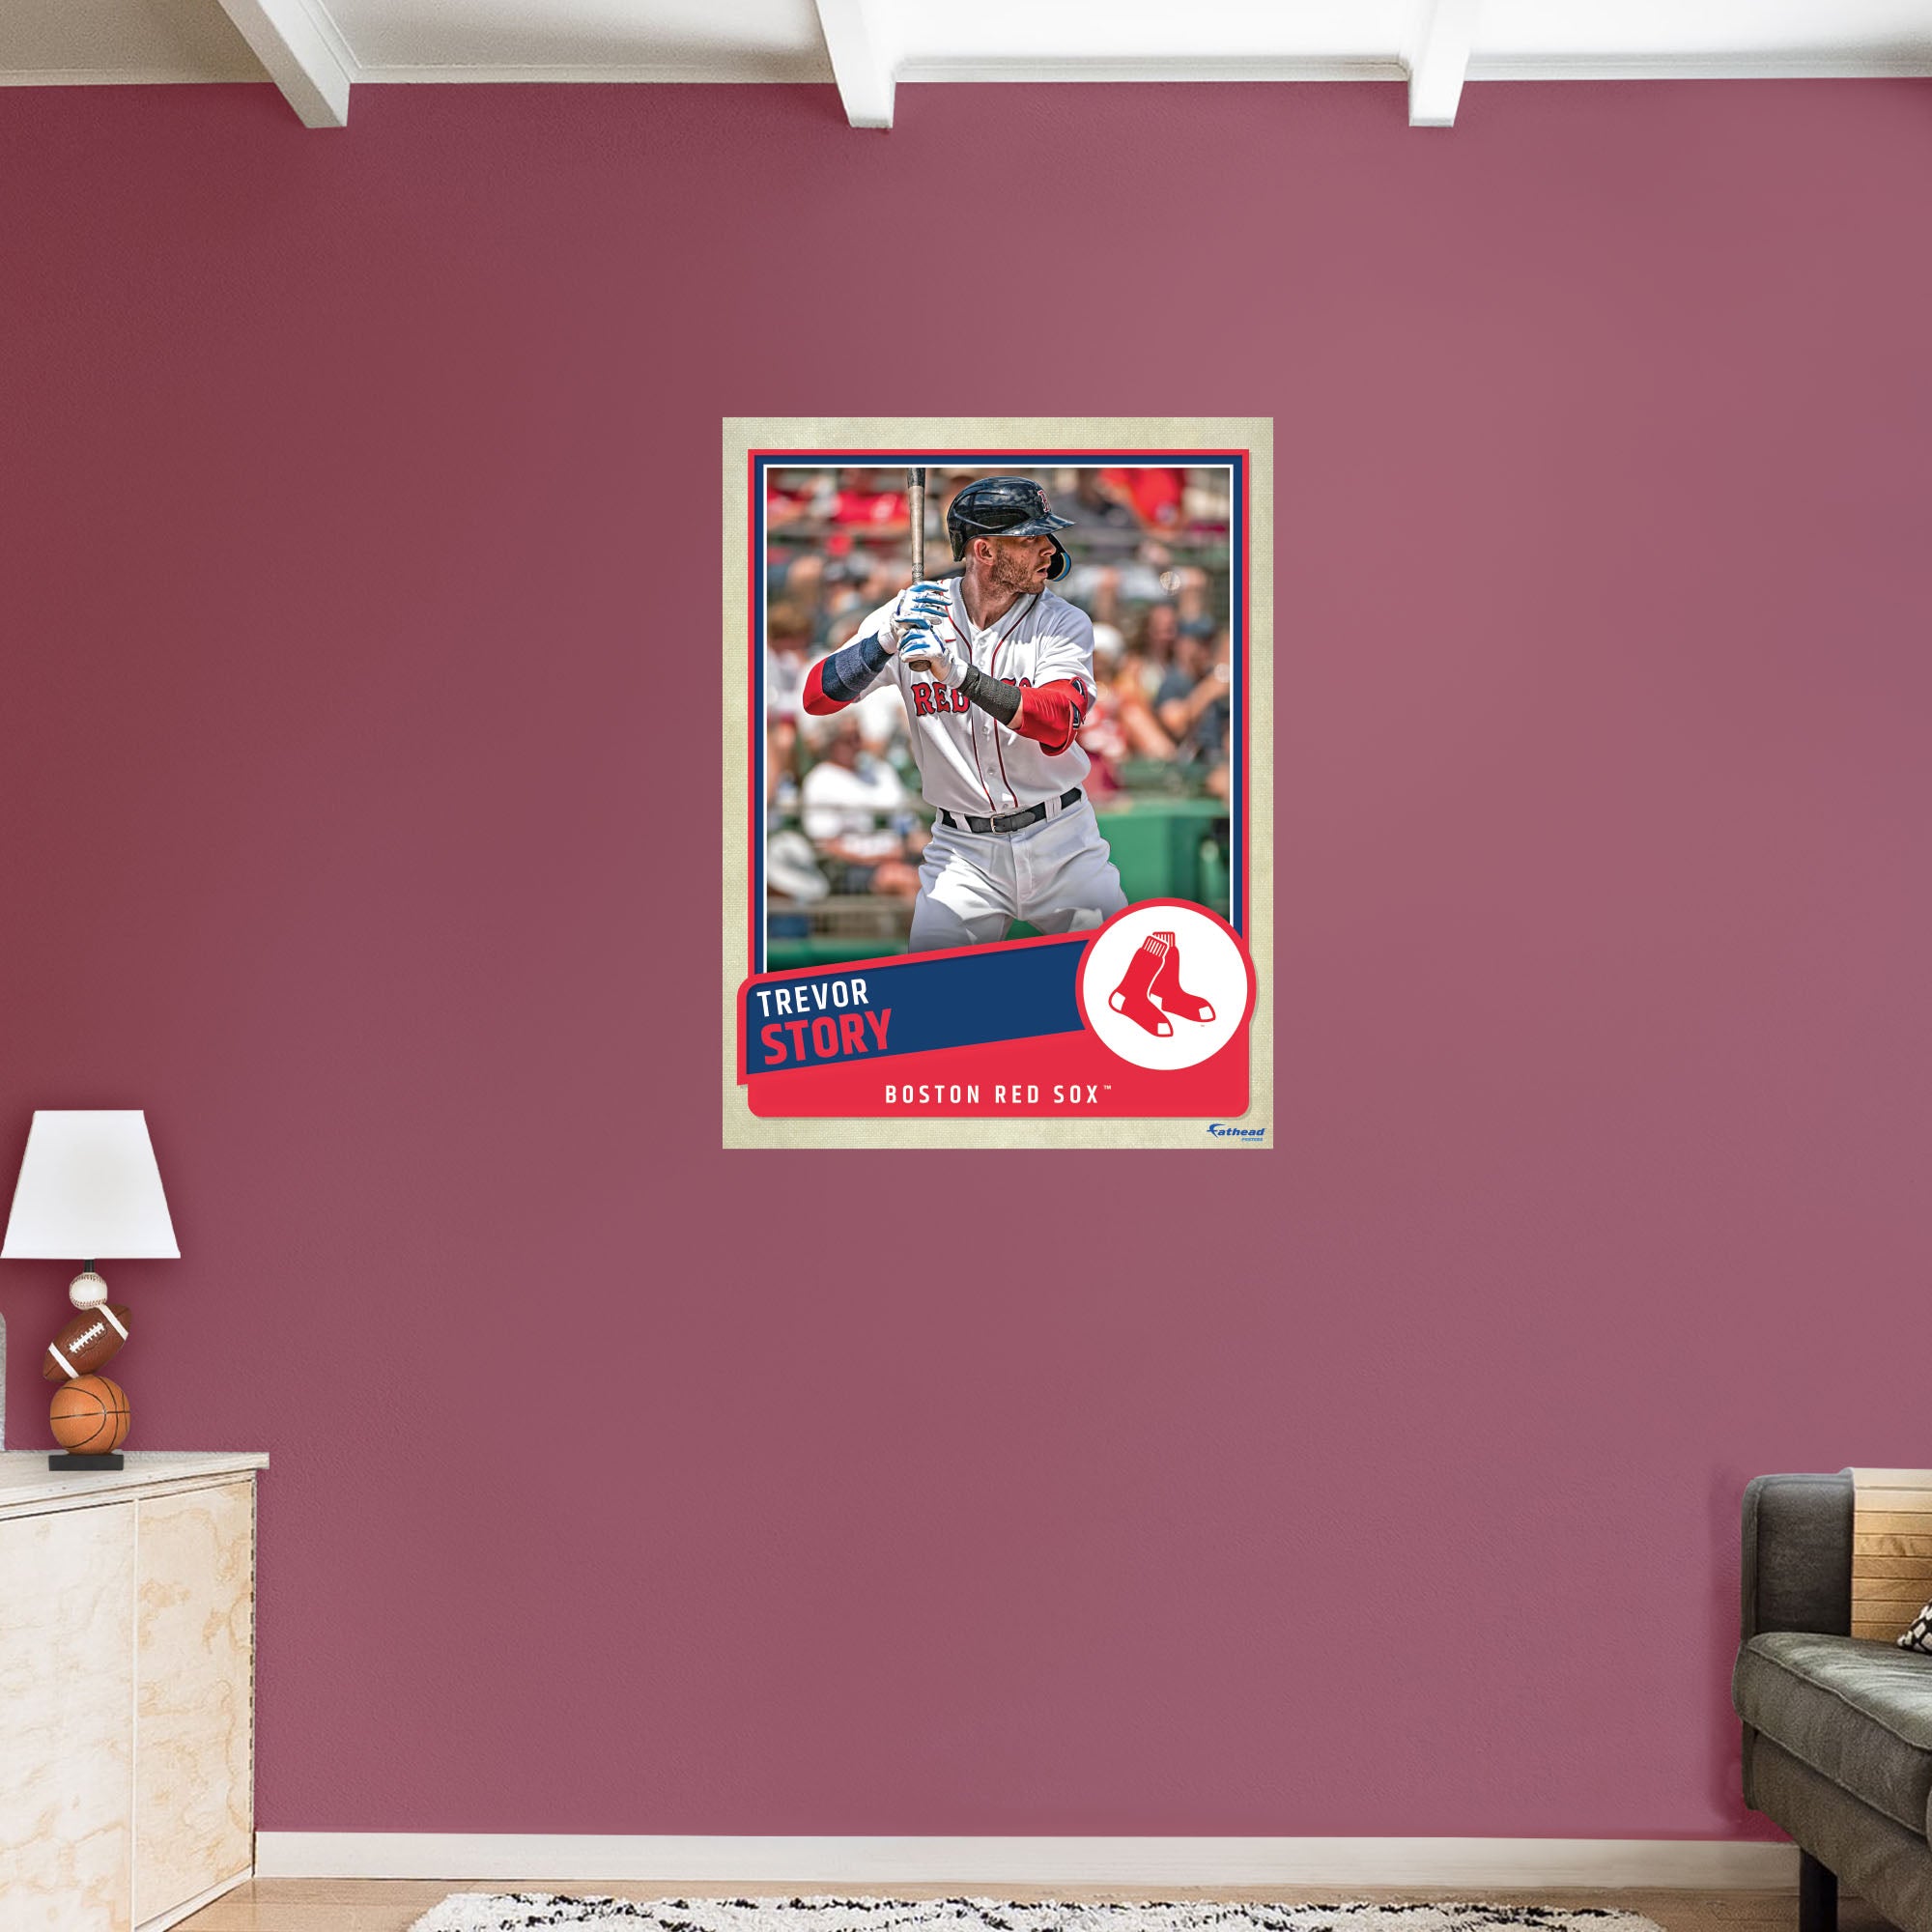 Colesi_Design on X: Trevor Story Poster Design #Graphics #Design #gfx  #Rockies #MLB  / X